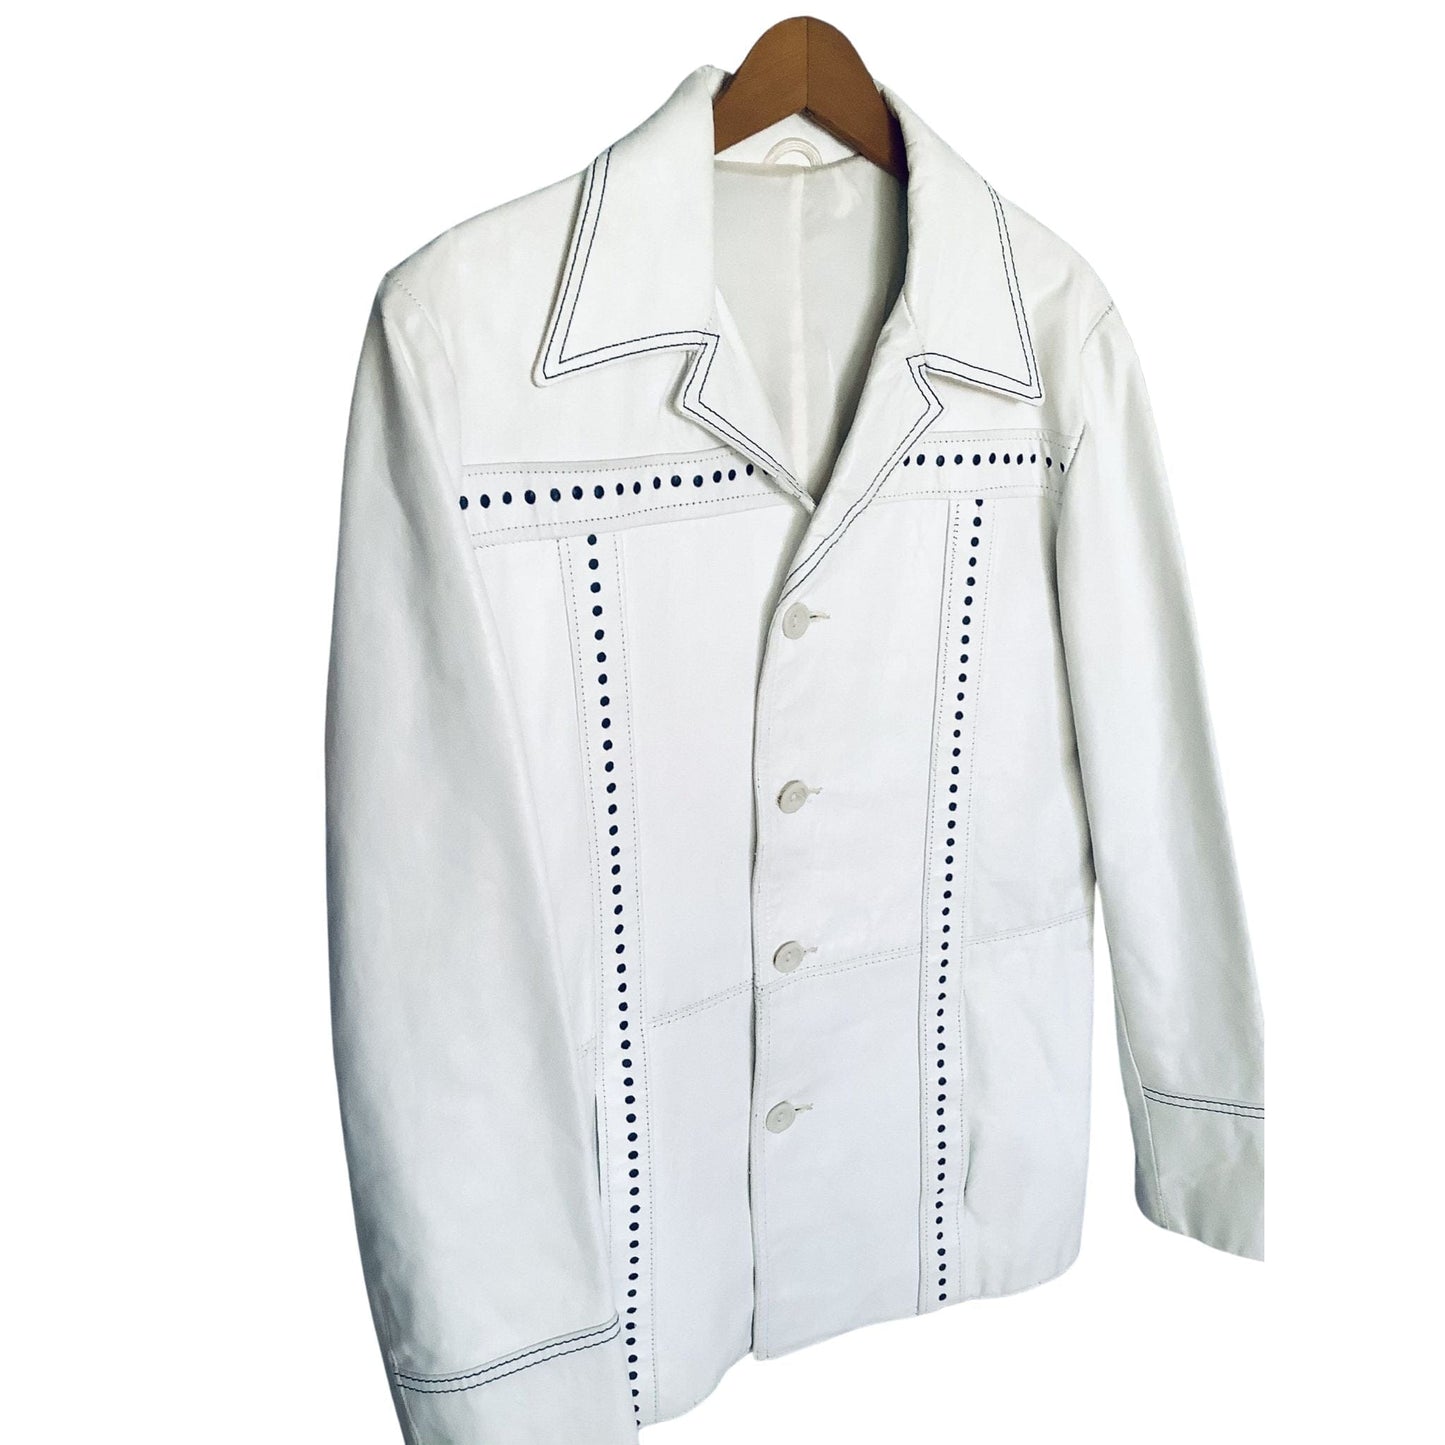 Pioneer Wear Leather Jacket Large / White / Vintage 1950s